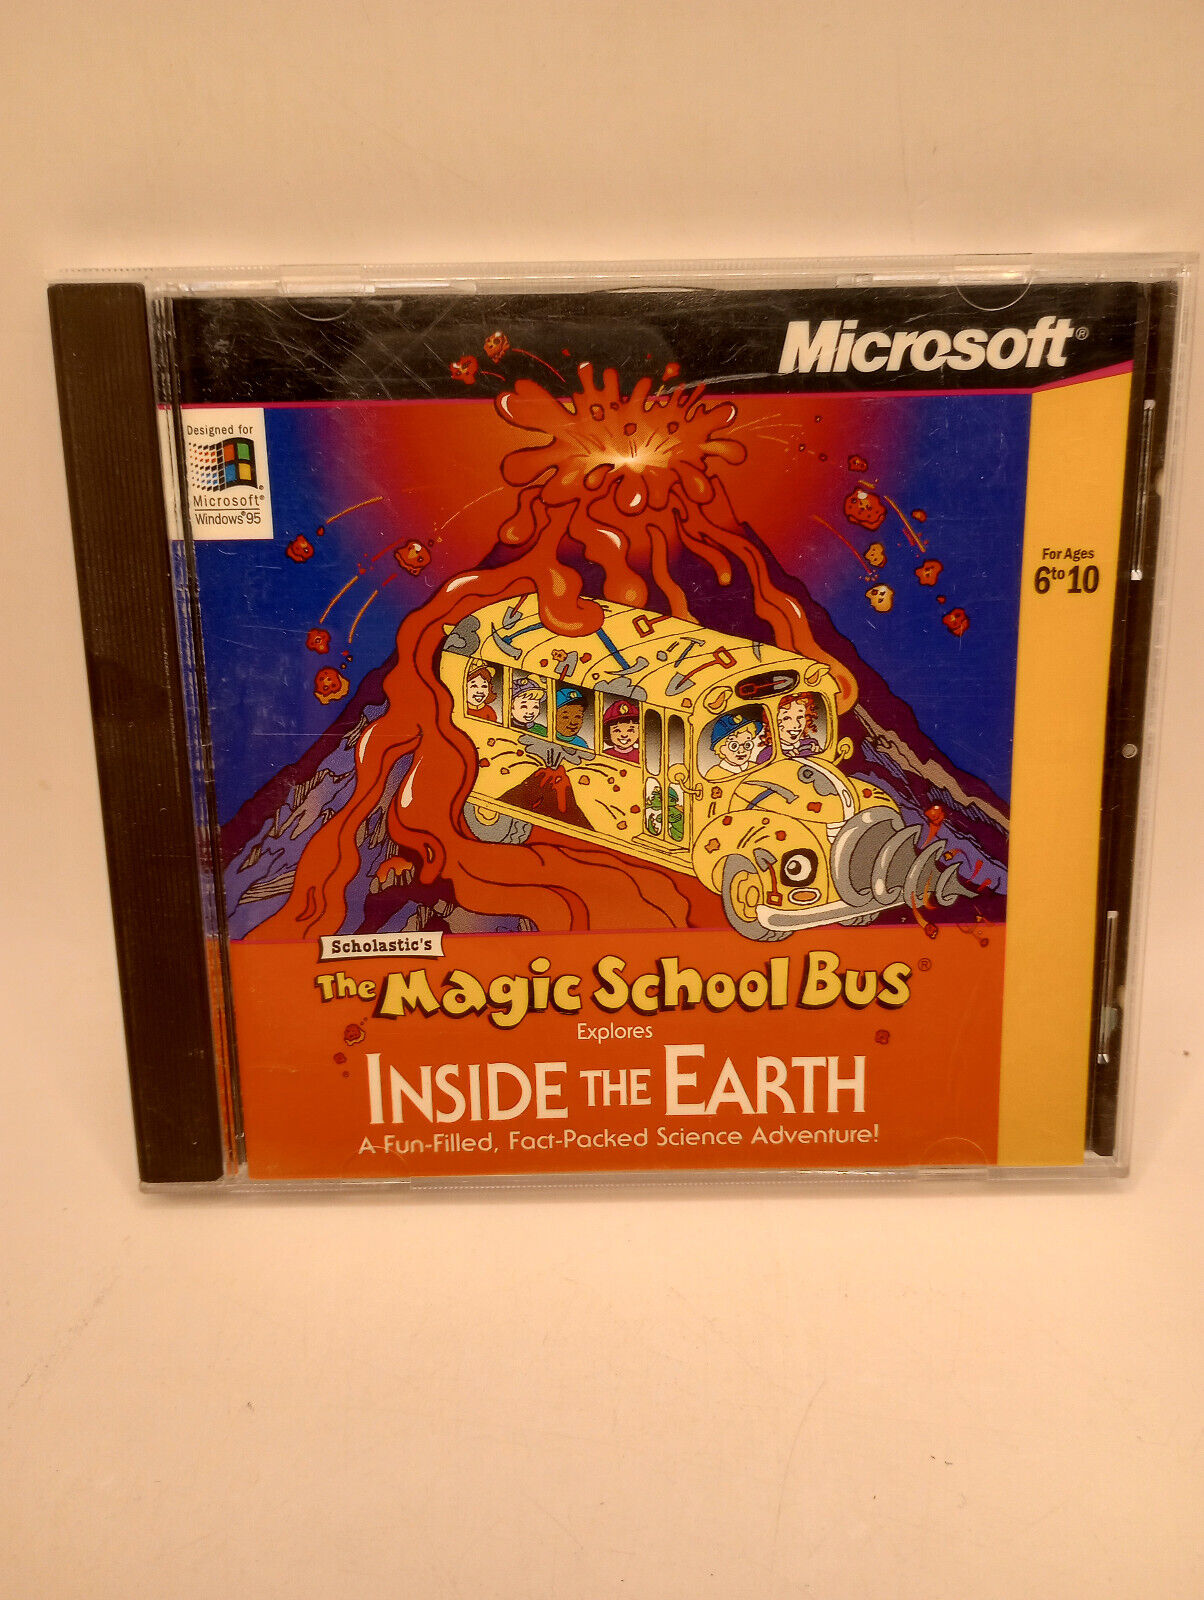 Microsoft Scholastic's The Magic School Bus Explores Inside the Earth Software